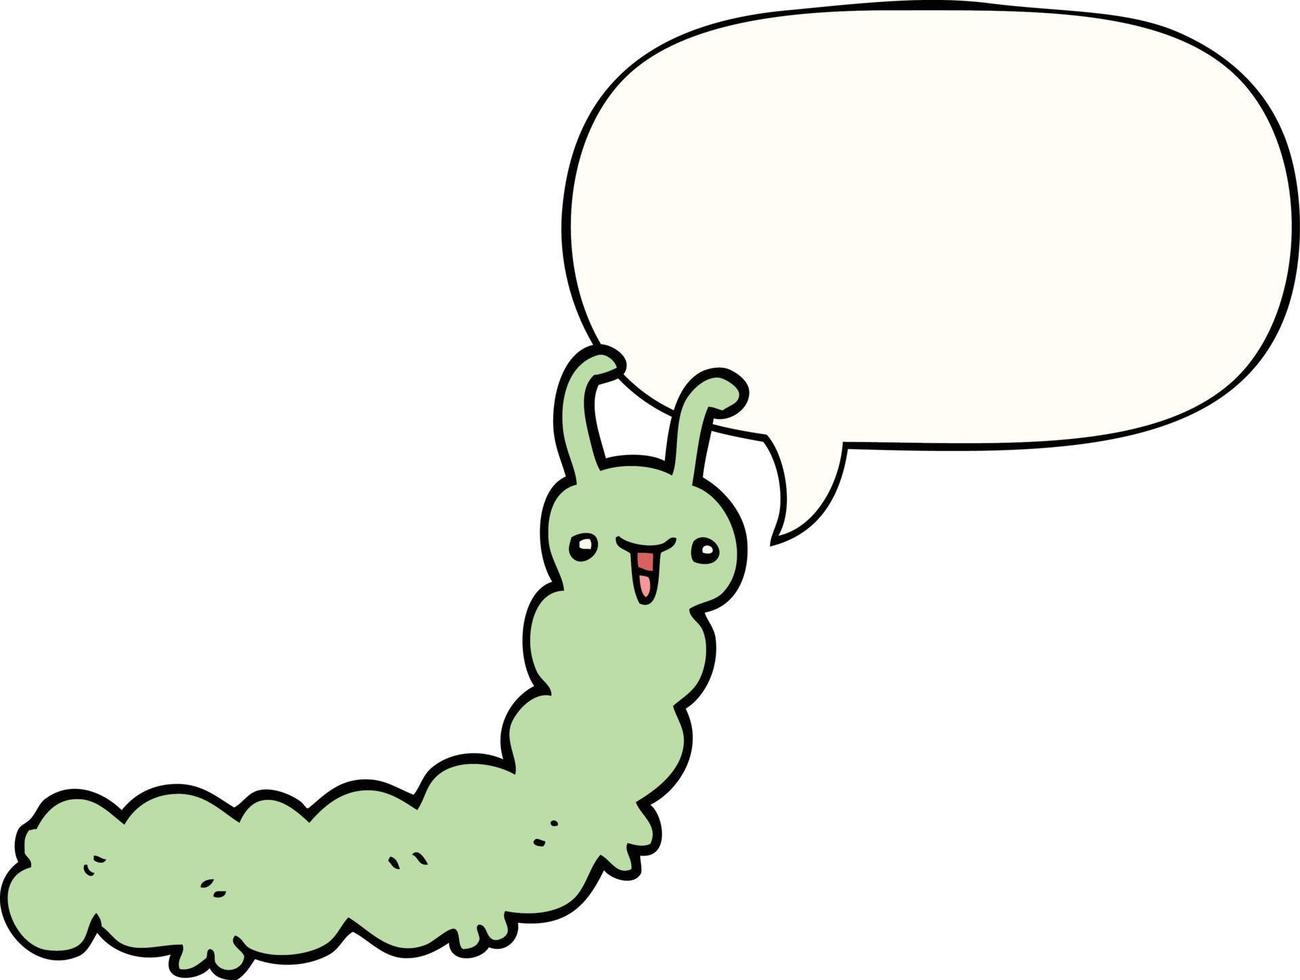 cartoon caterpillar and speech bubble vector